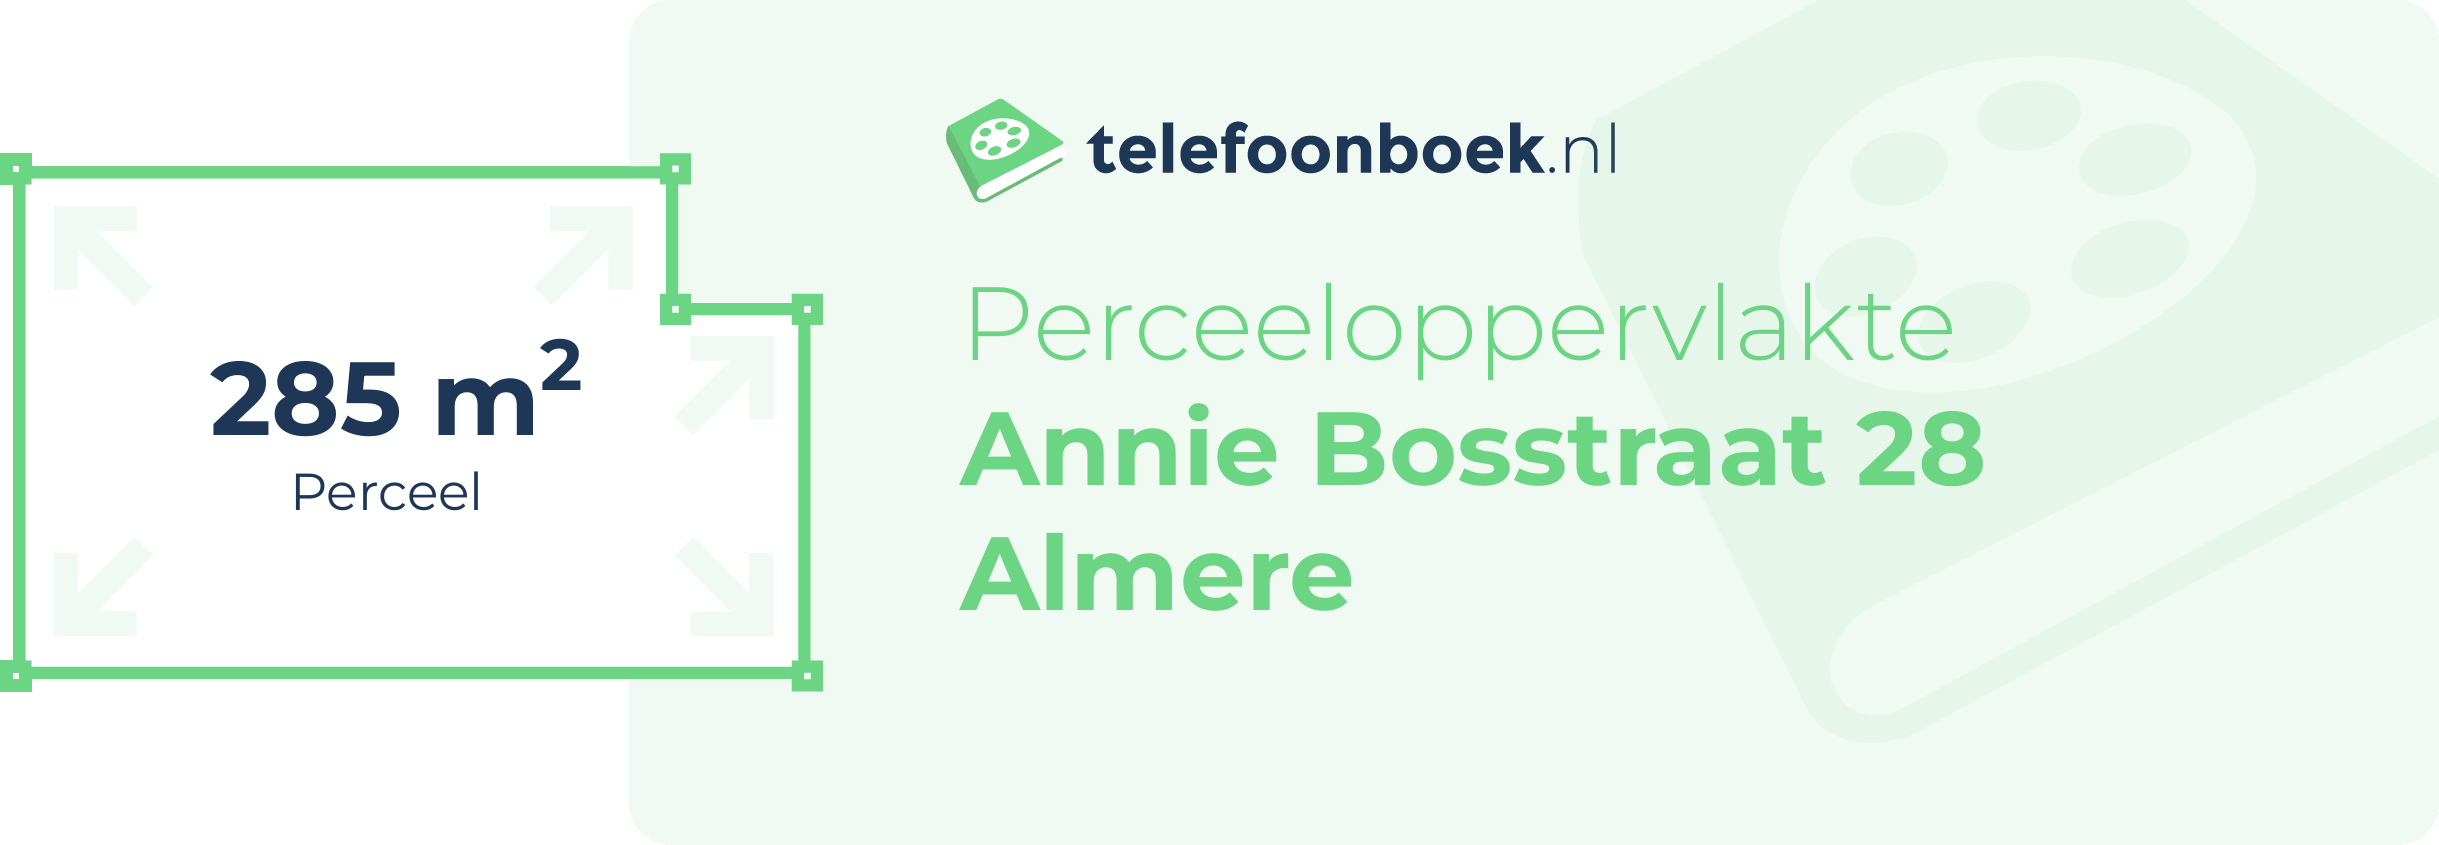 Perceeloppervlakte Annie Bosstraat 28 Almere